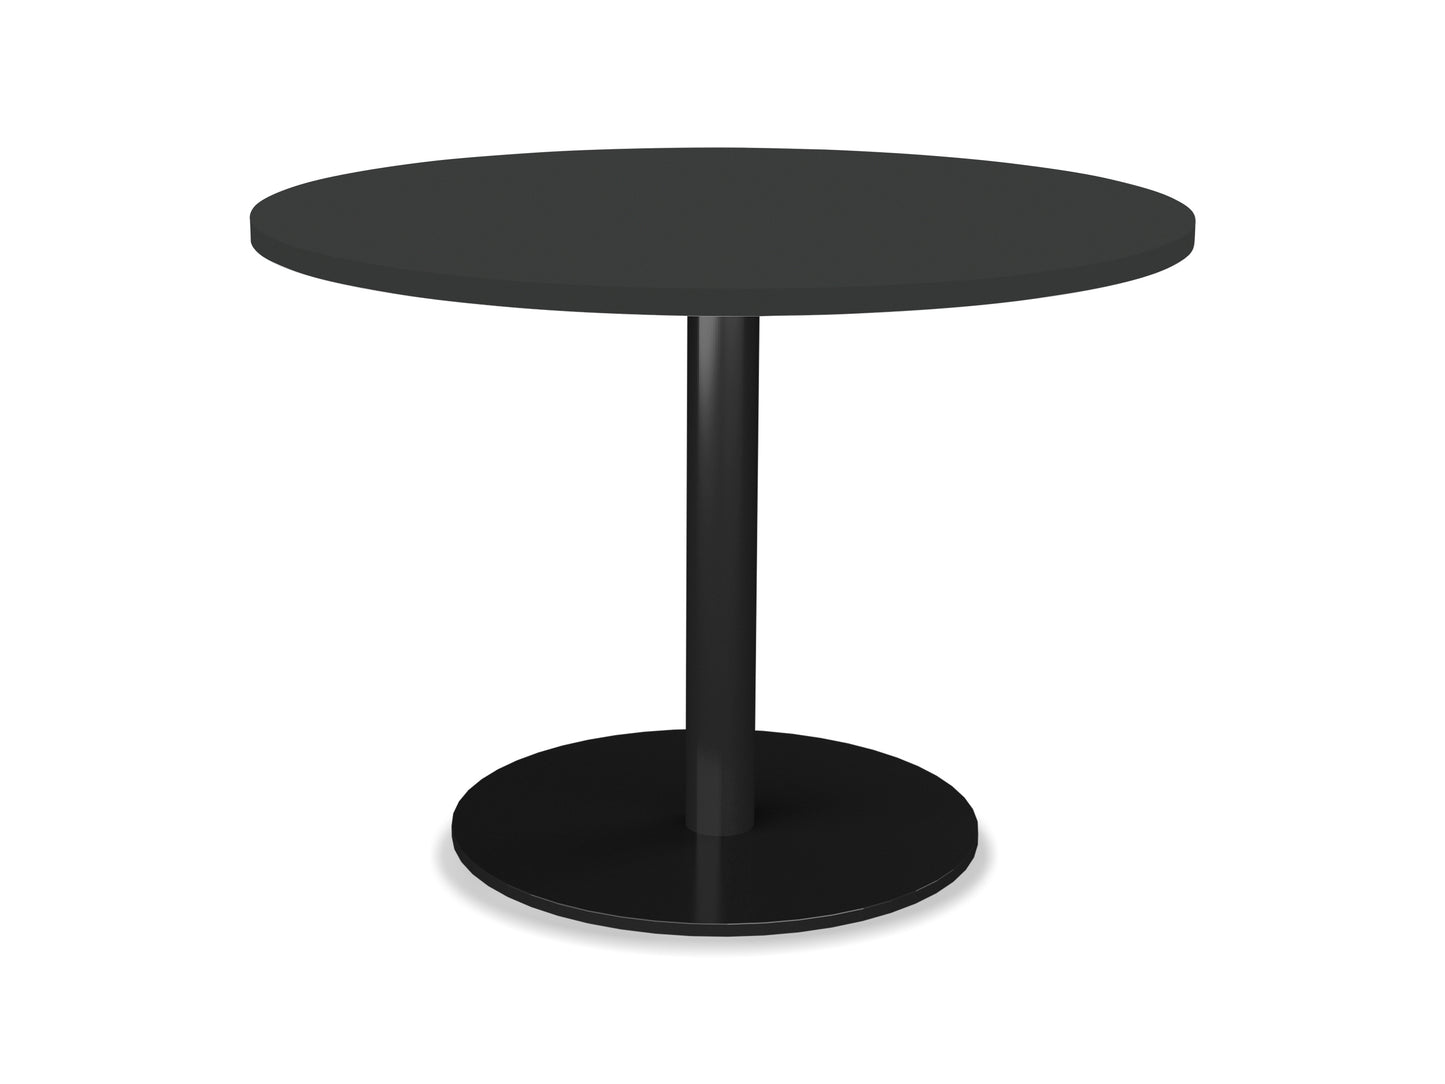 Round High Pedestal table